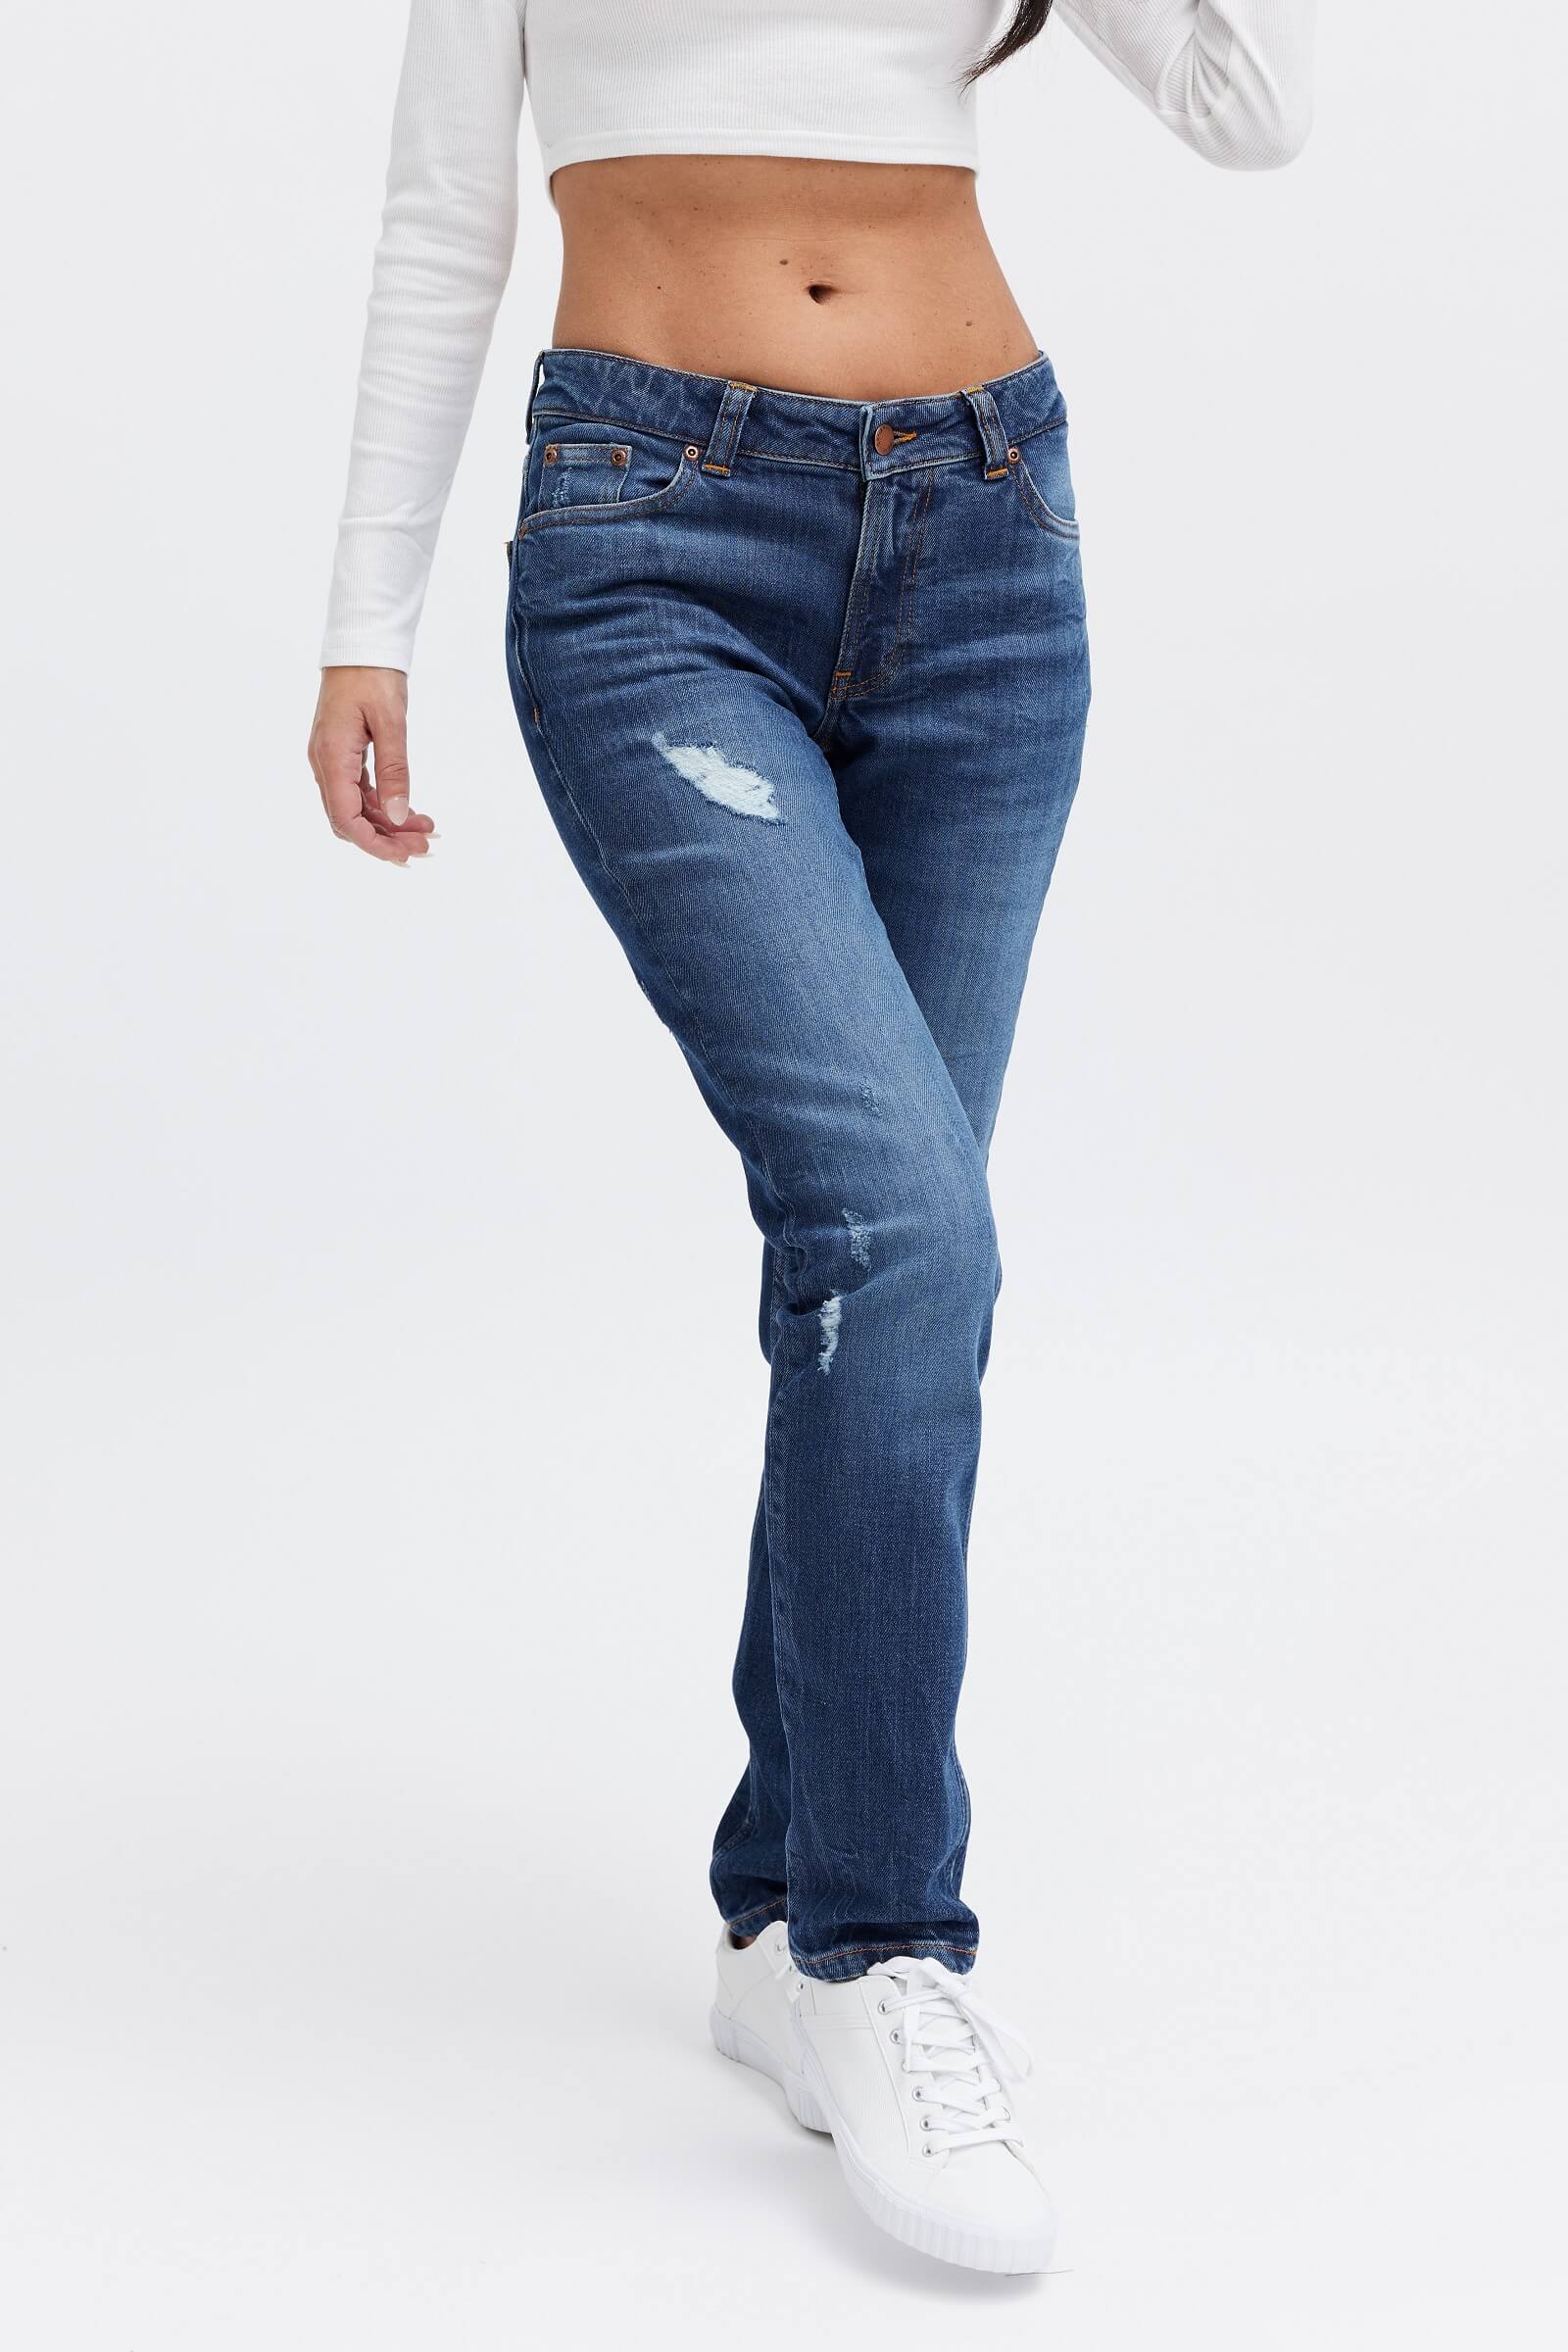 quality organic denim jeans.